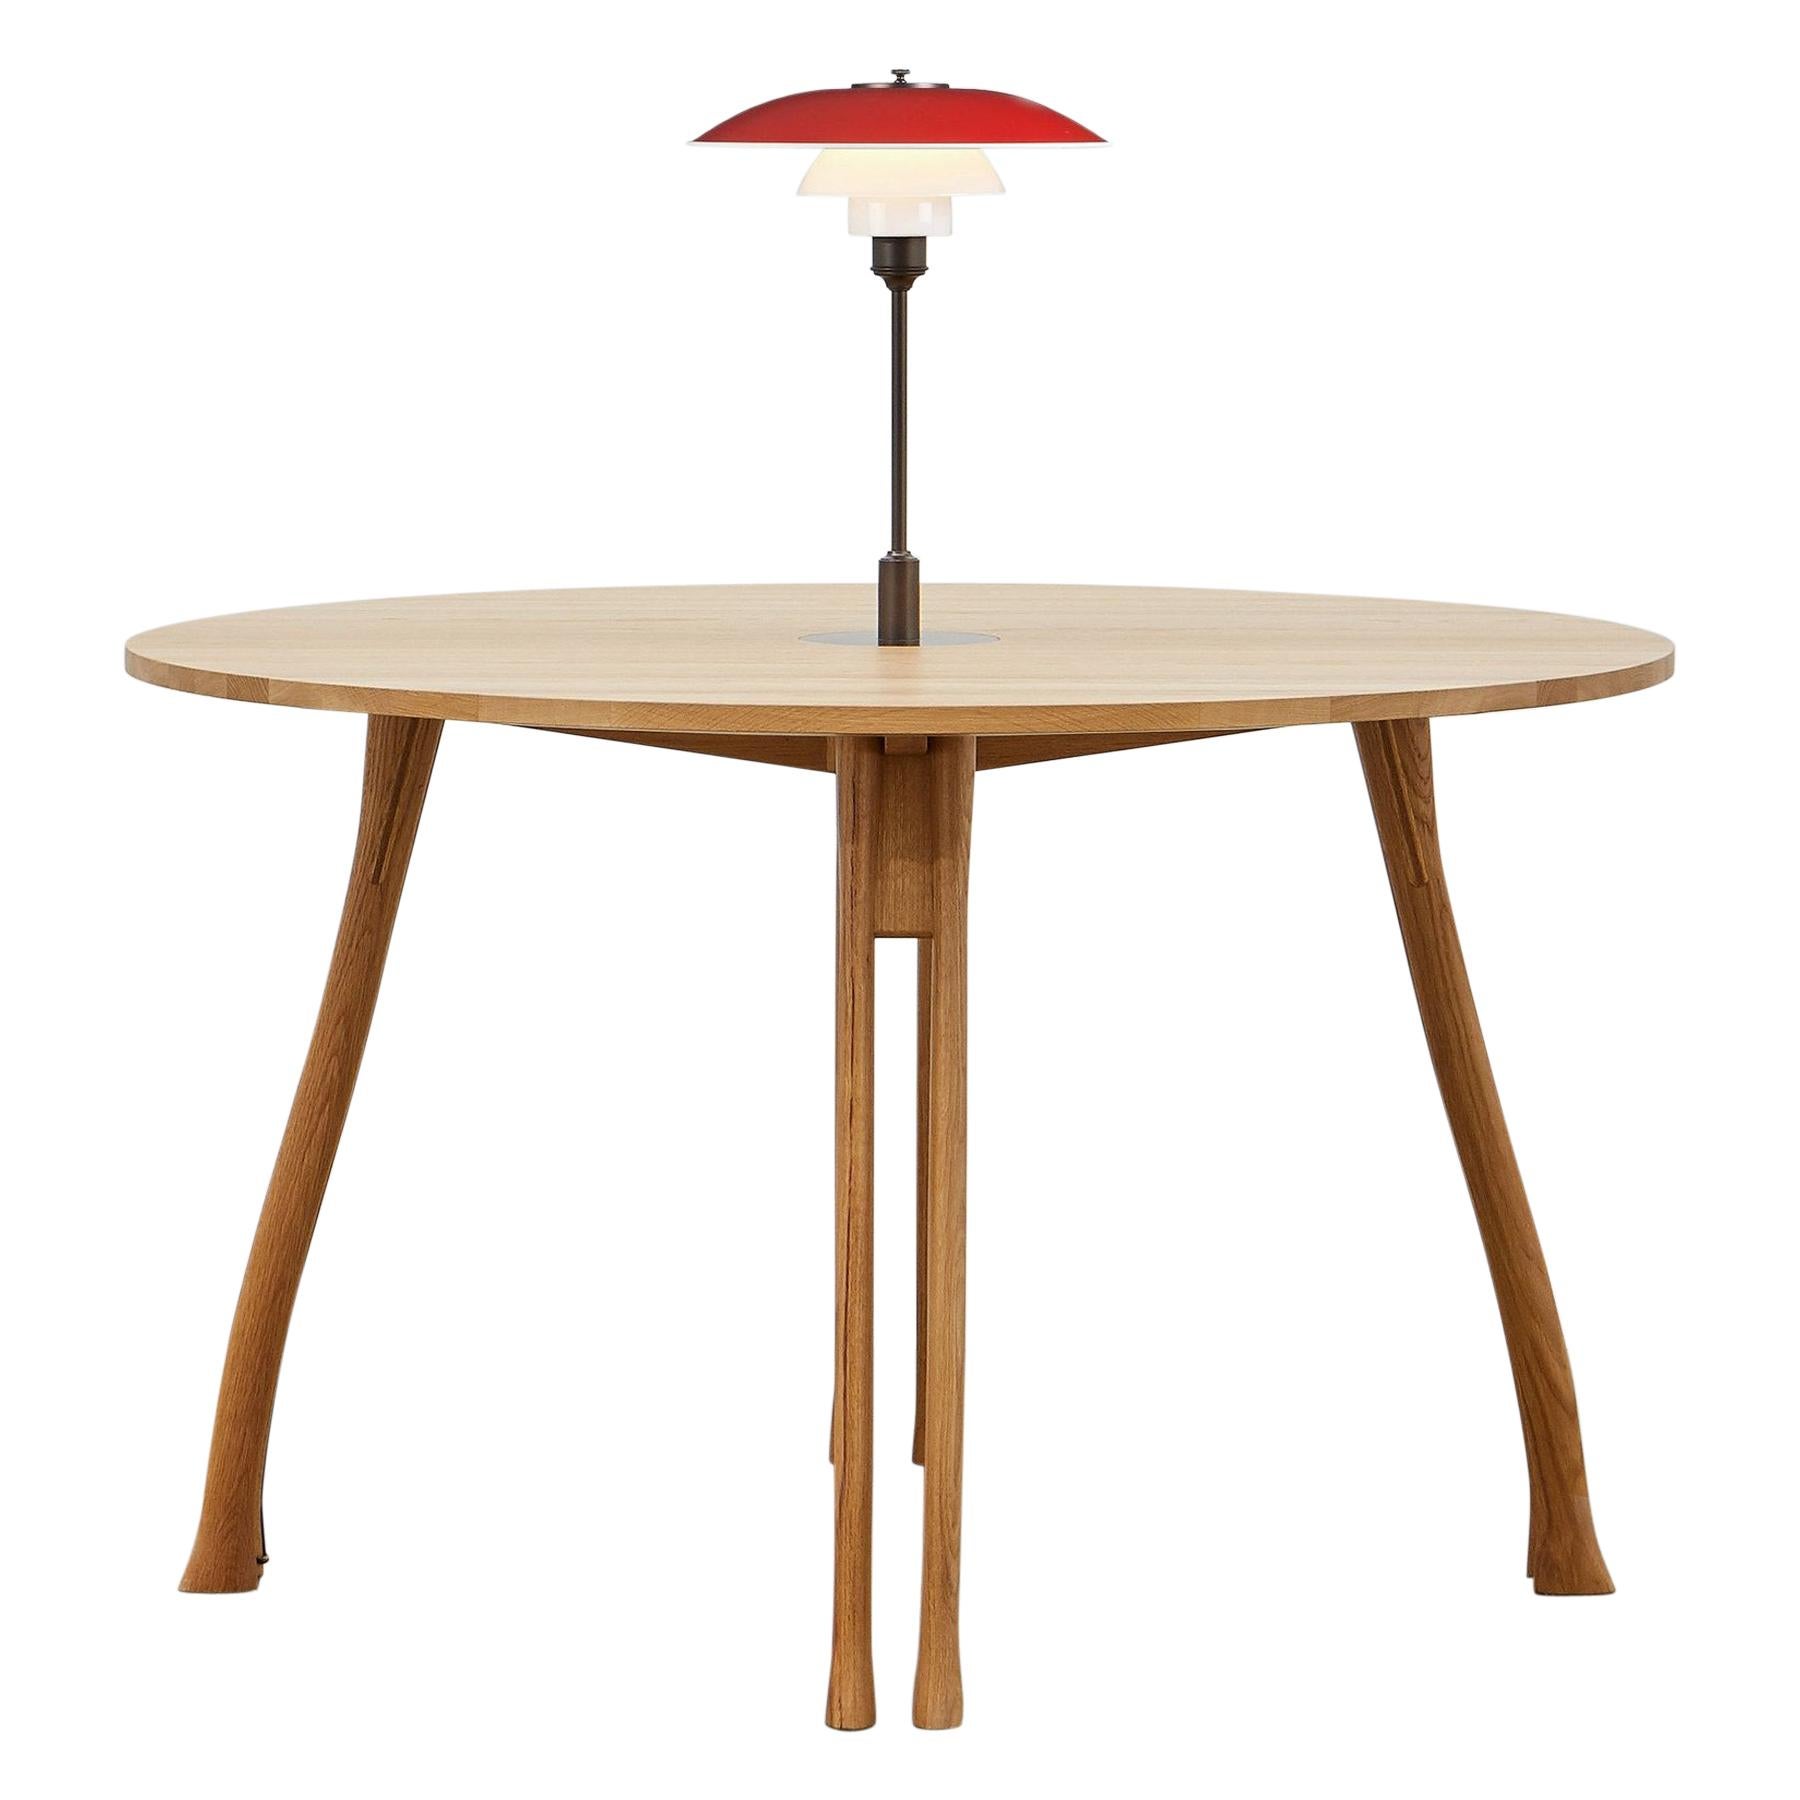 PH Axe Table, natural oak legs, veneer table plate, red PH 3 ½ - 2 ½ lamp